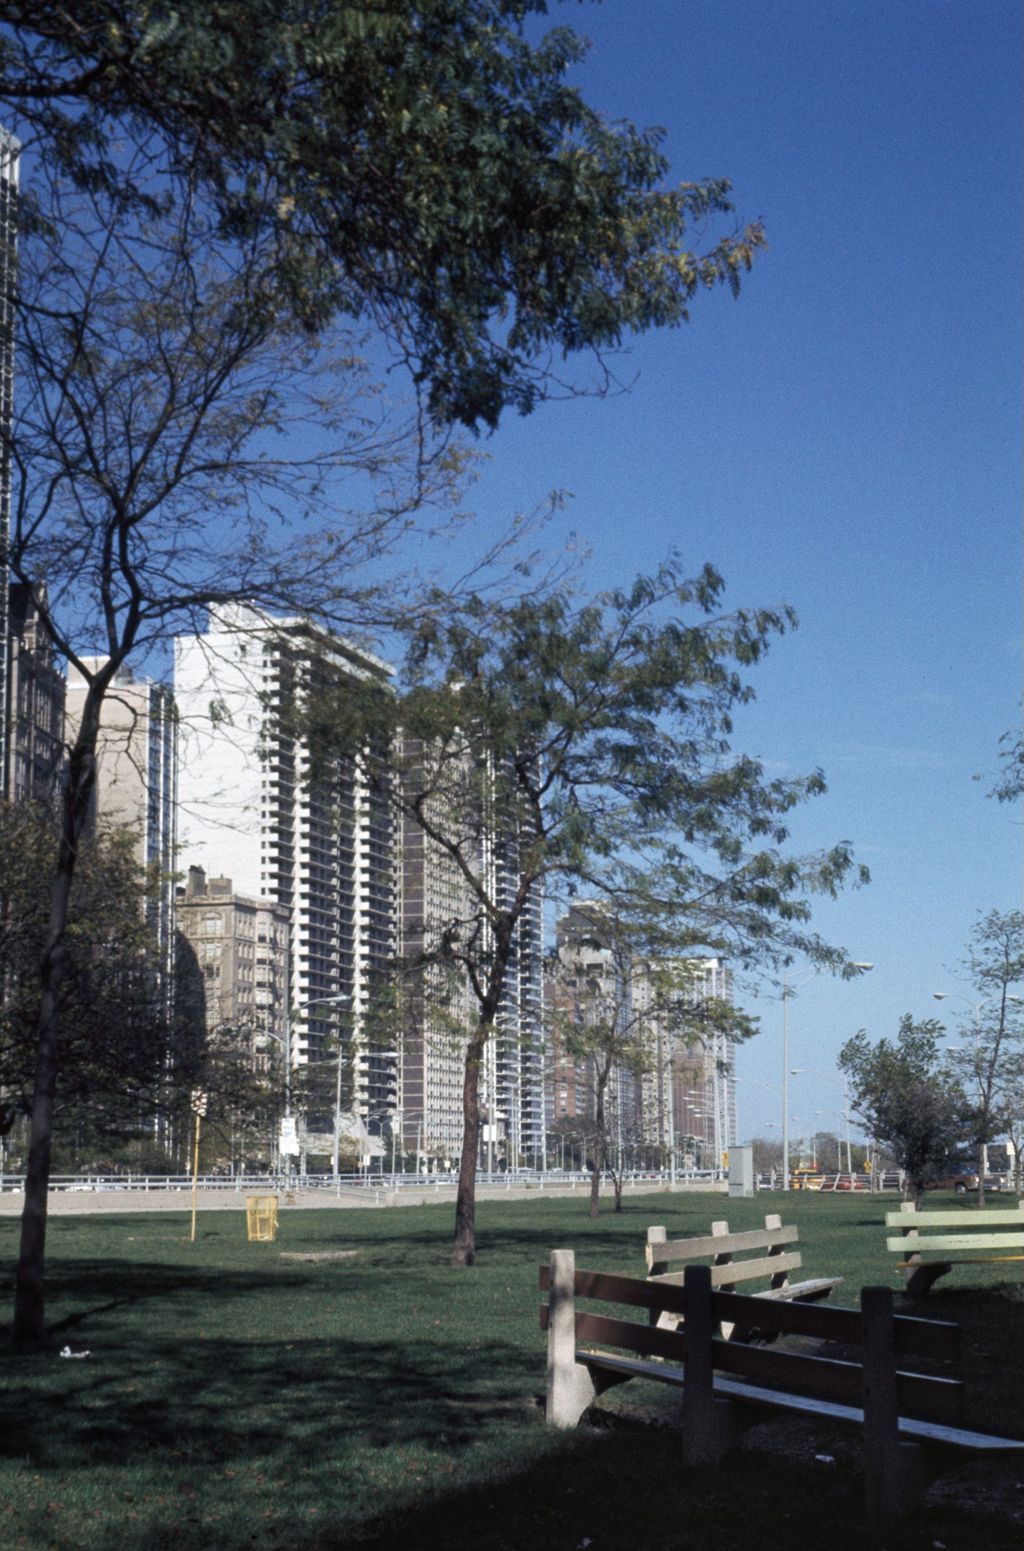 Miniature of High-rise apartment buildings along North Lake Shore Drive